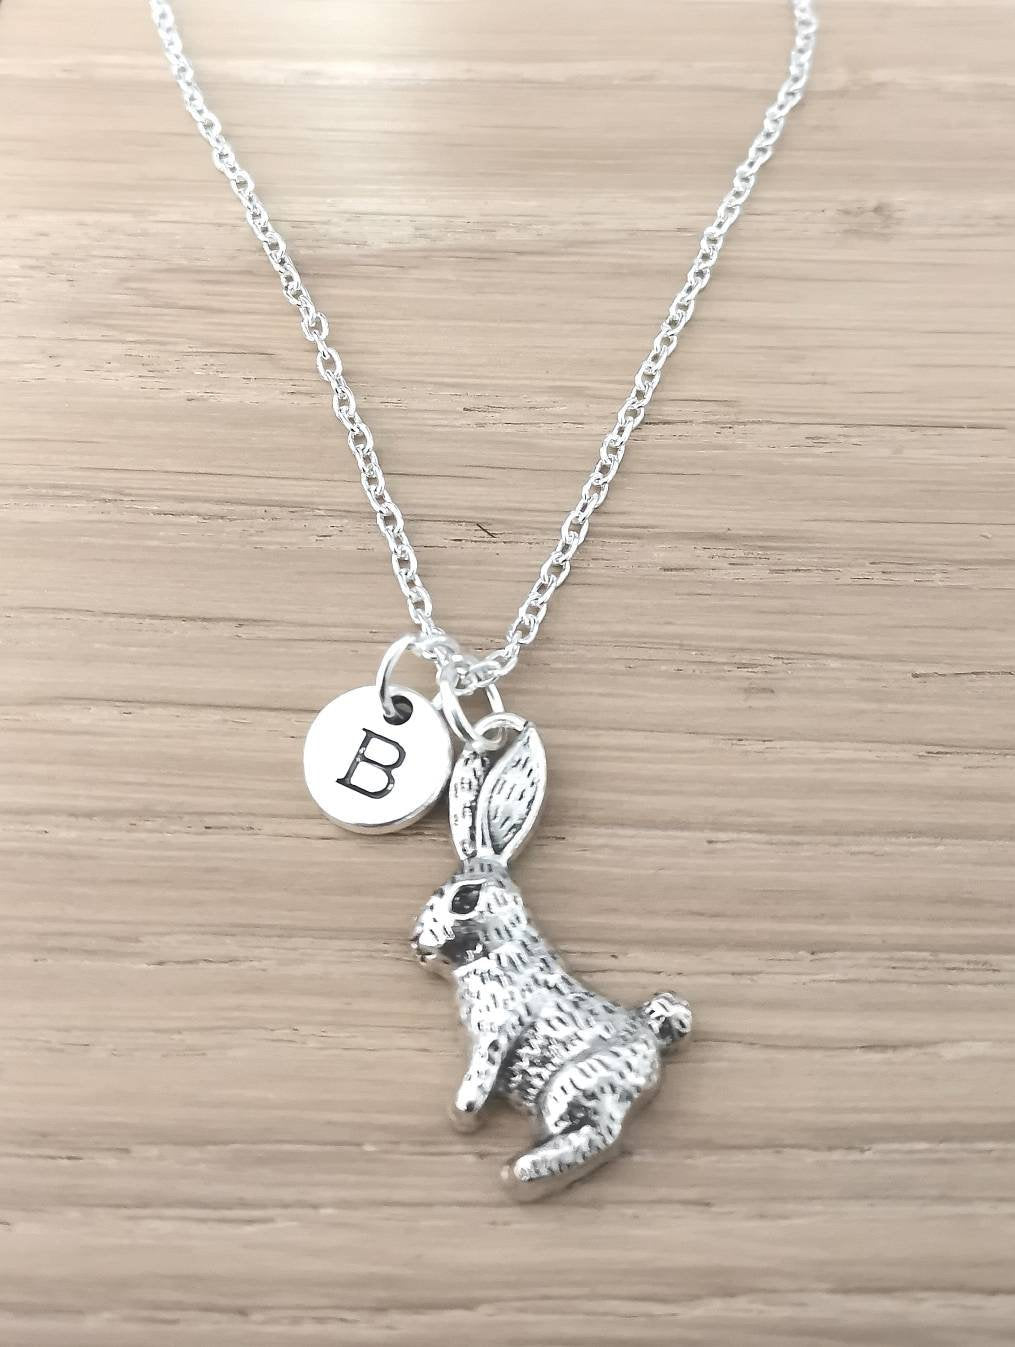 Rabbit Jewelry, Rabbit Necklace, Rabbit Gift, Hare Jewellery, Hare Gift, Hare Necklace, Bunny Gift, Bunny Necklace, Animal, Kids, Friend